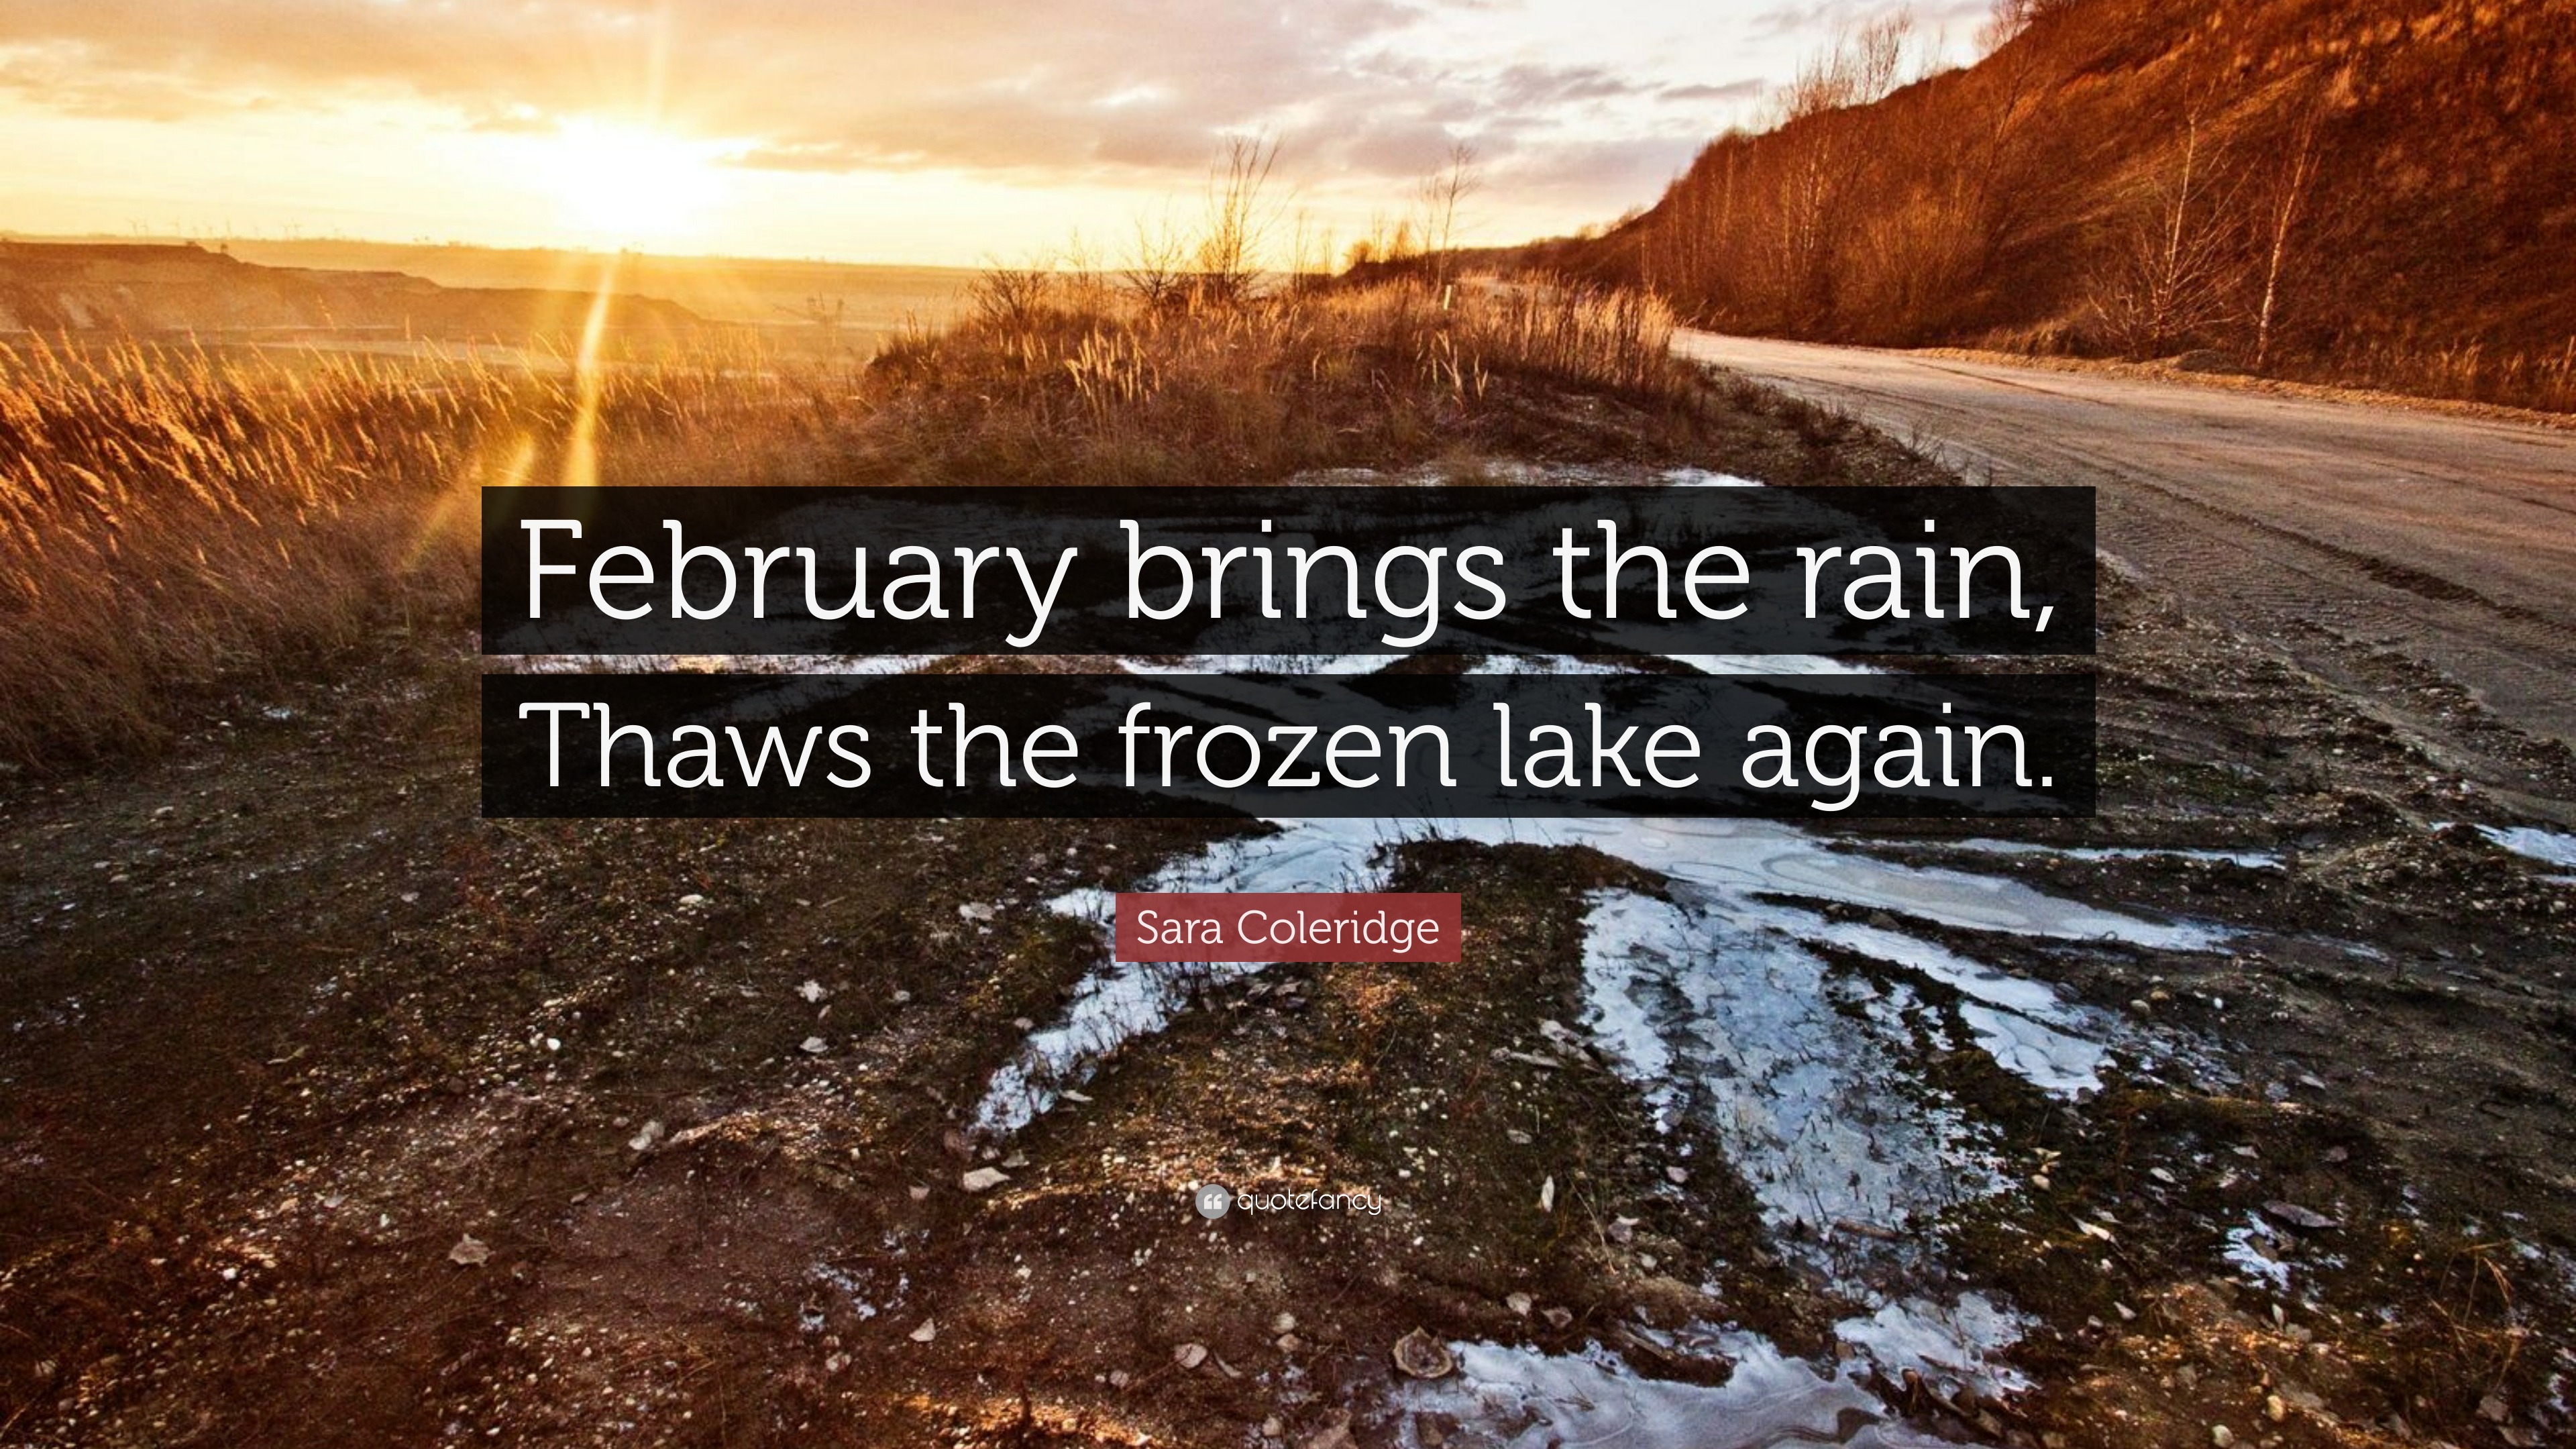 Sara Coleridge Quote: “February brings the rain, Thaws the frozen ...